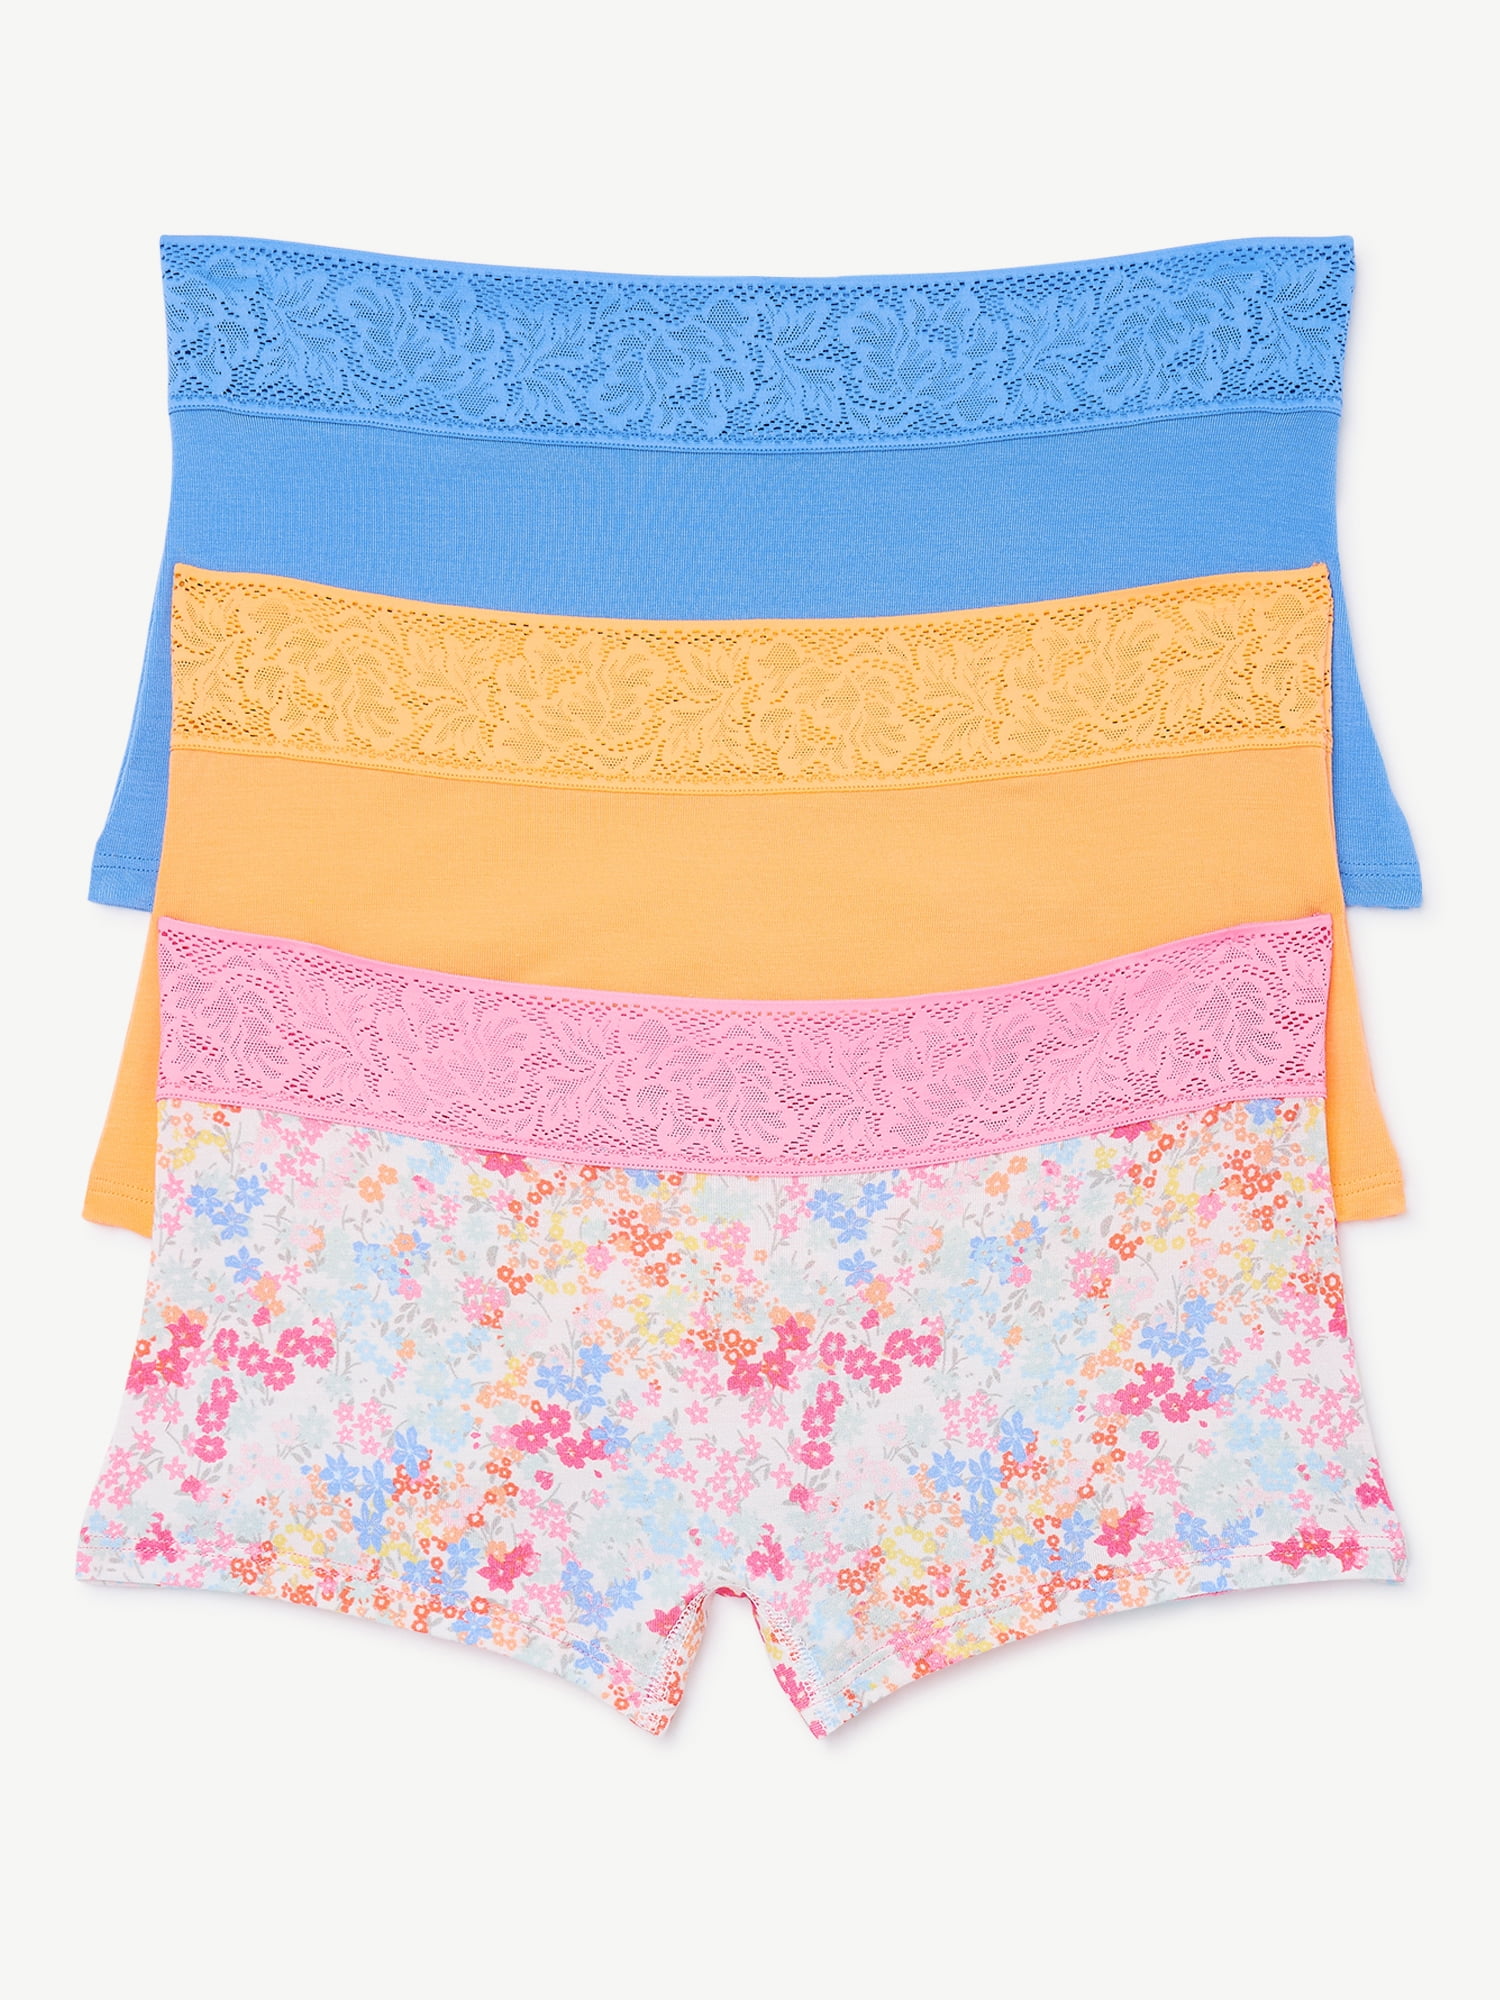 Joyspun Women's Modal and Lace Boyshort Panties, 3-Pack, Sizes S